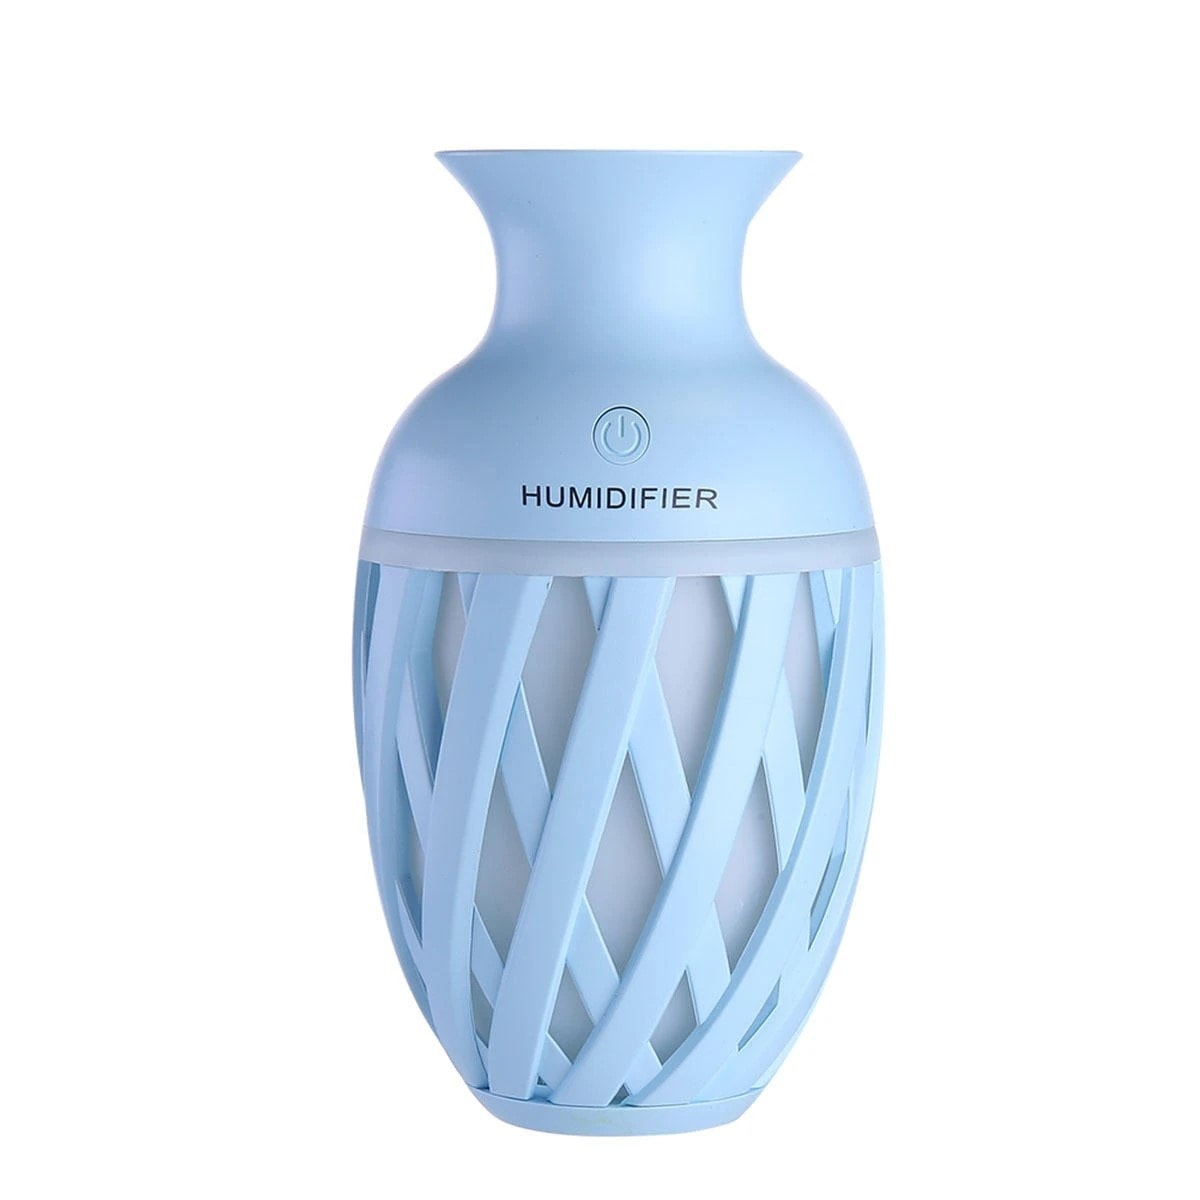 Difuzor ultrasonic vaza albastra 320 ml functie de umidificator aroma difuzor purificator aer usb